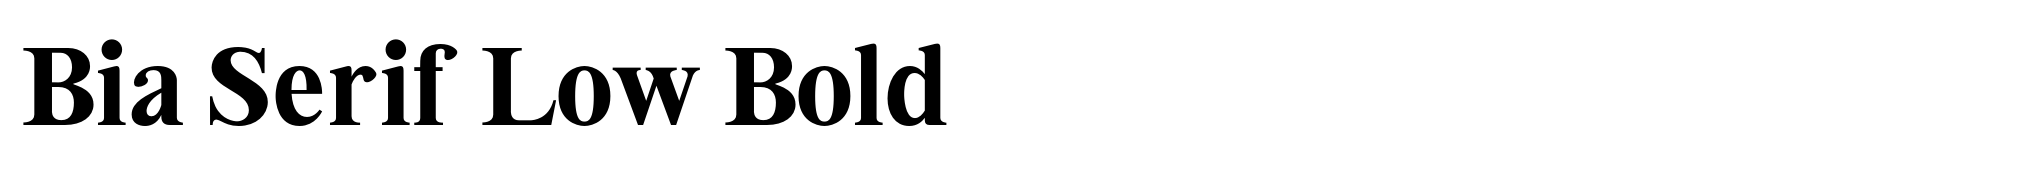 Bia Serif Low Bold image